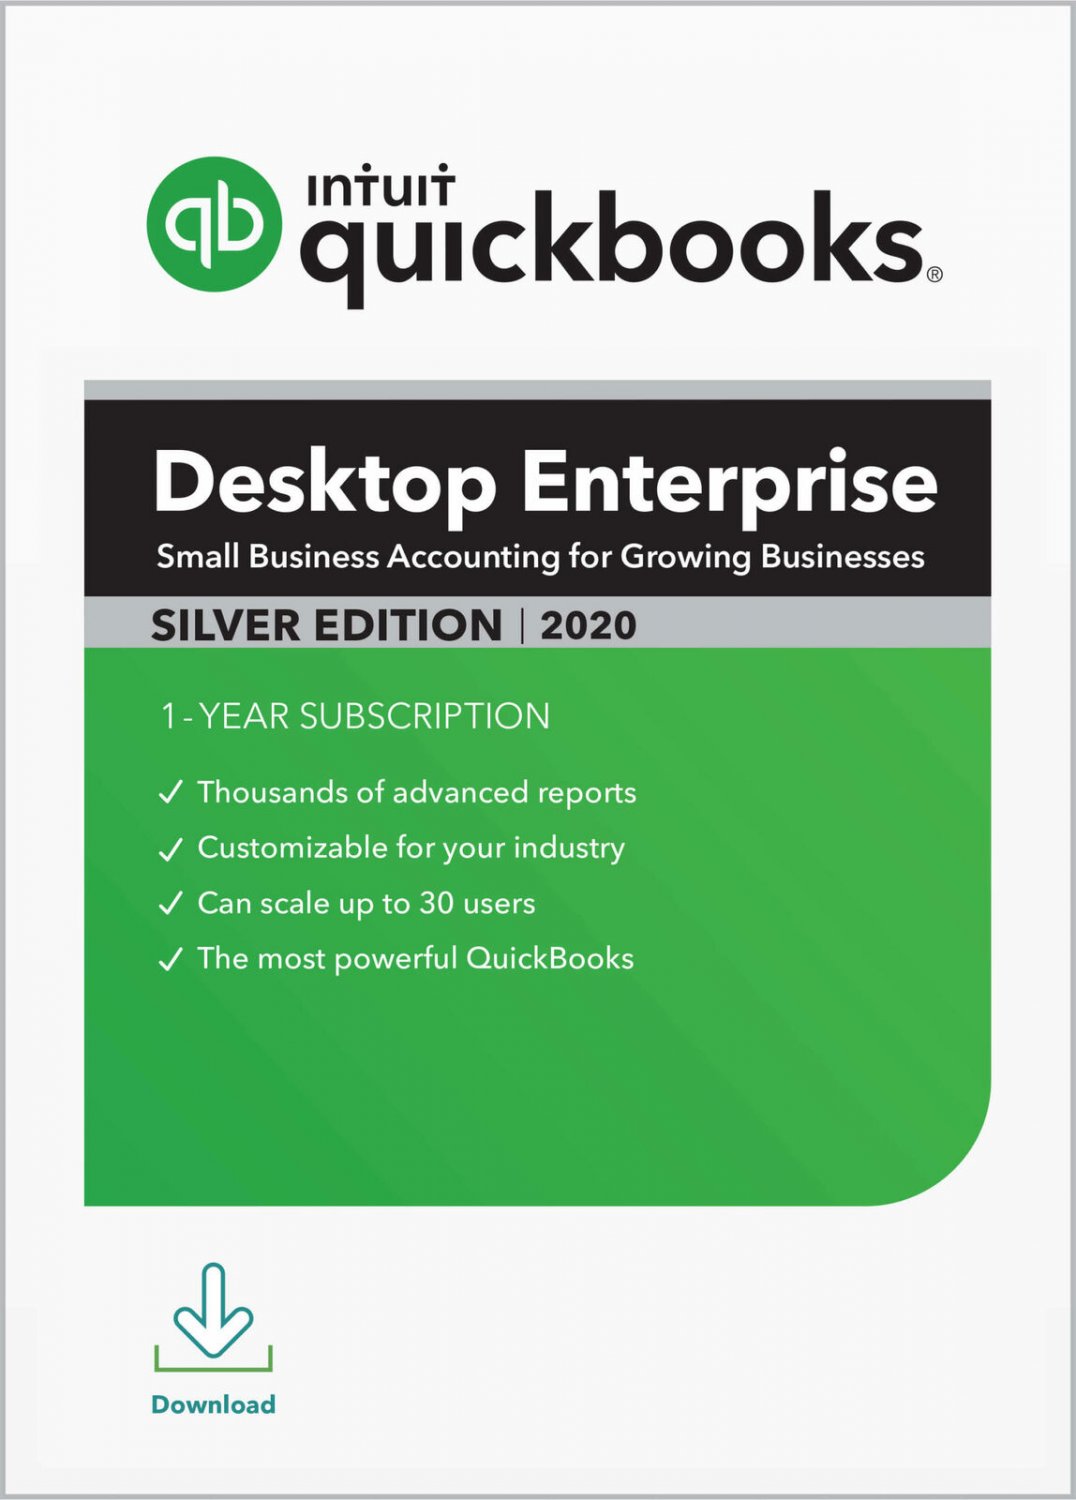 quickbooks enterprise validation code